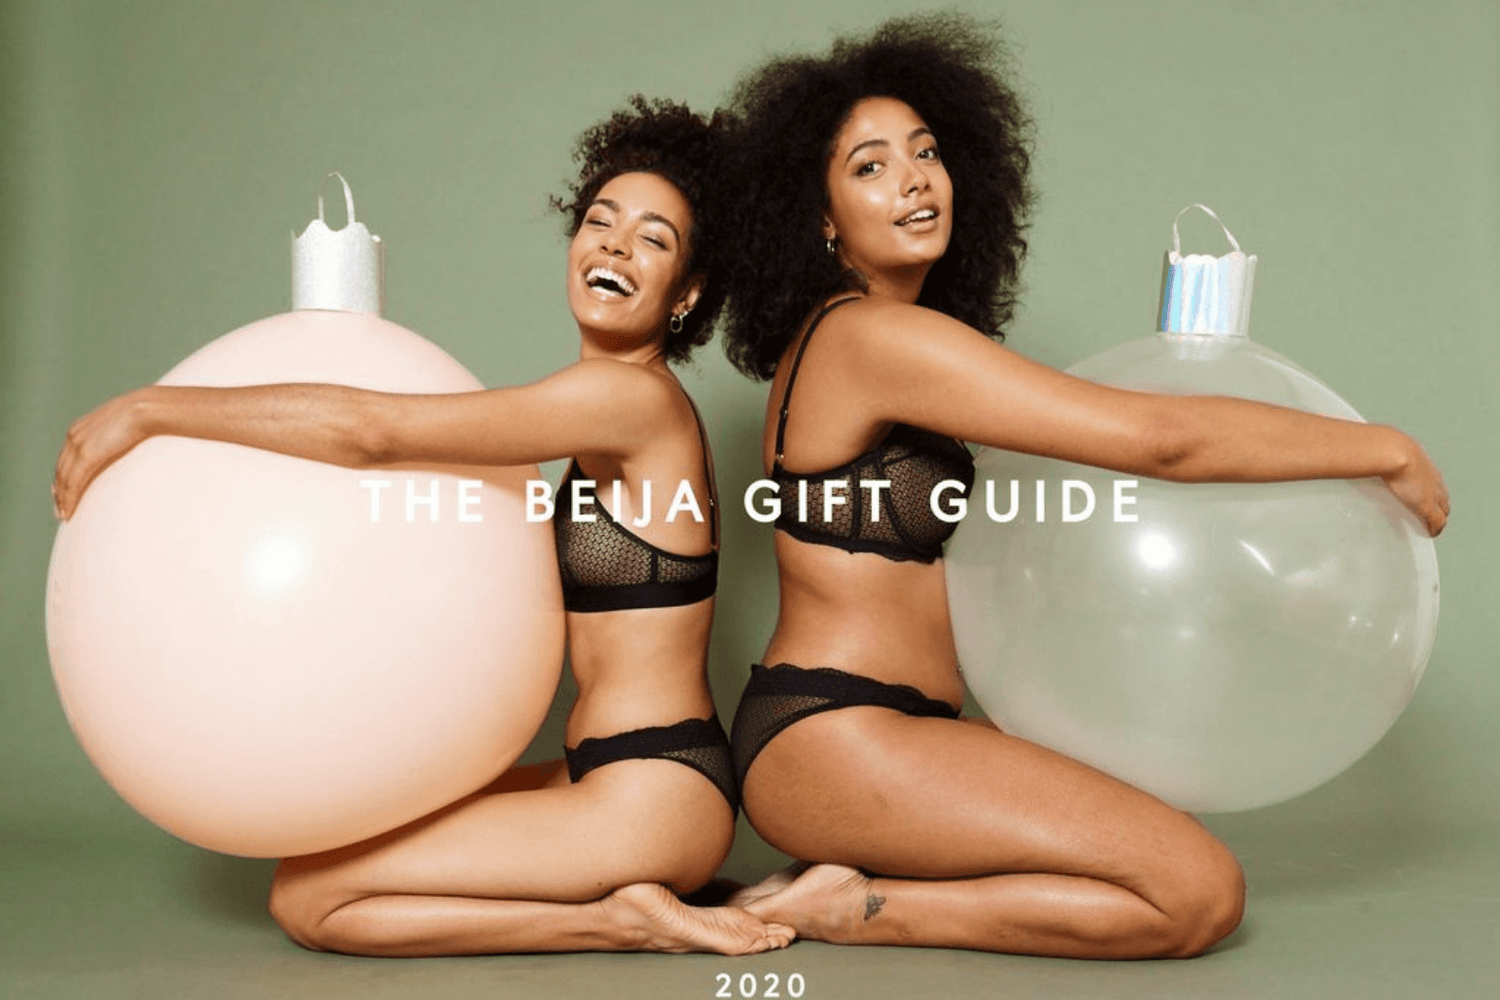 Beija's Gift Guide 2020